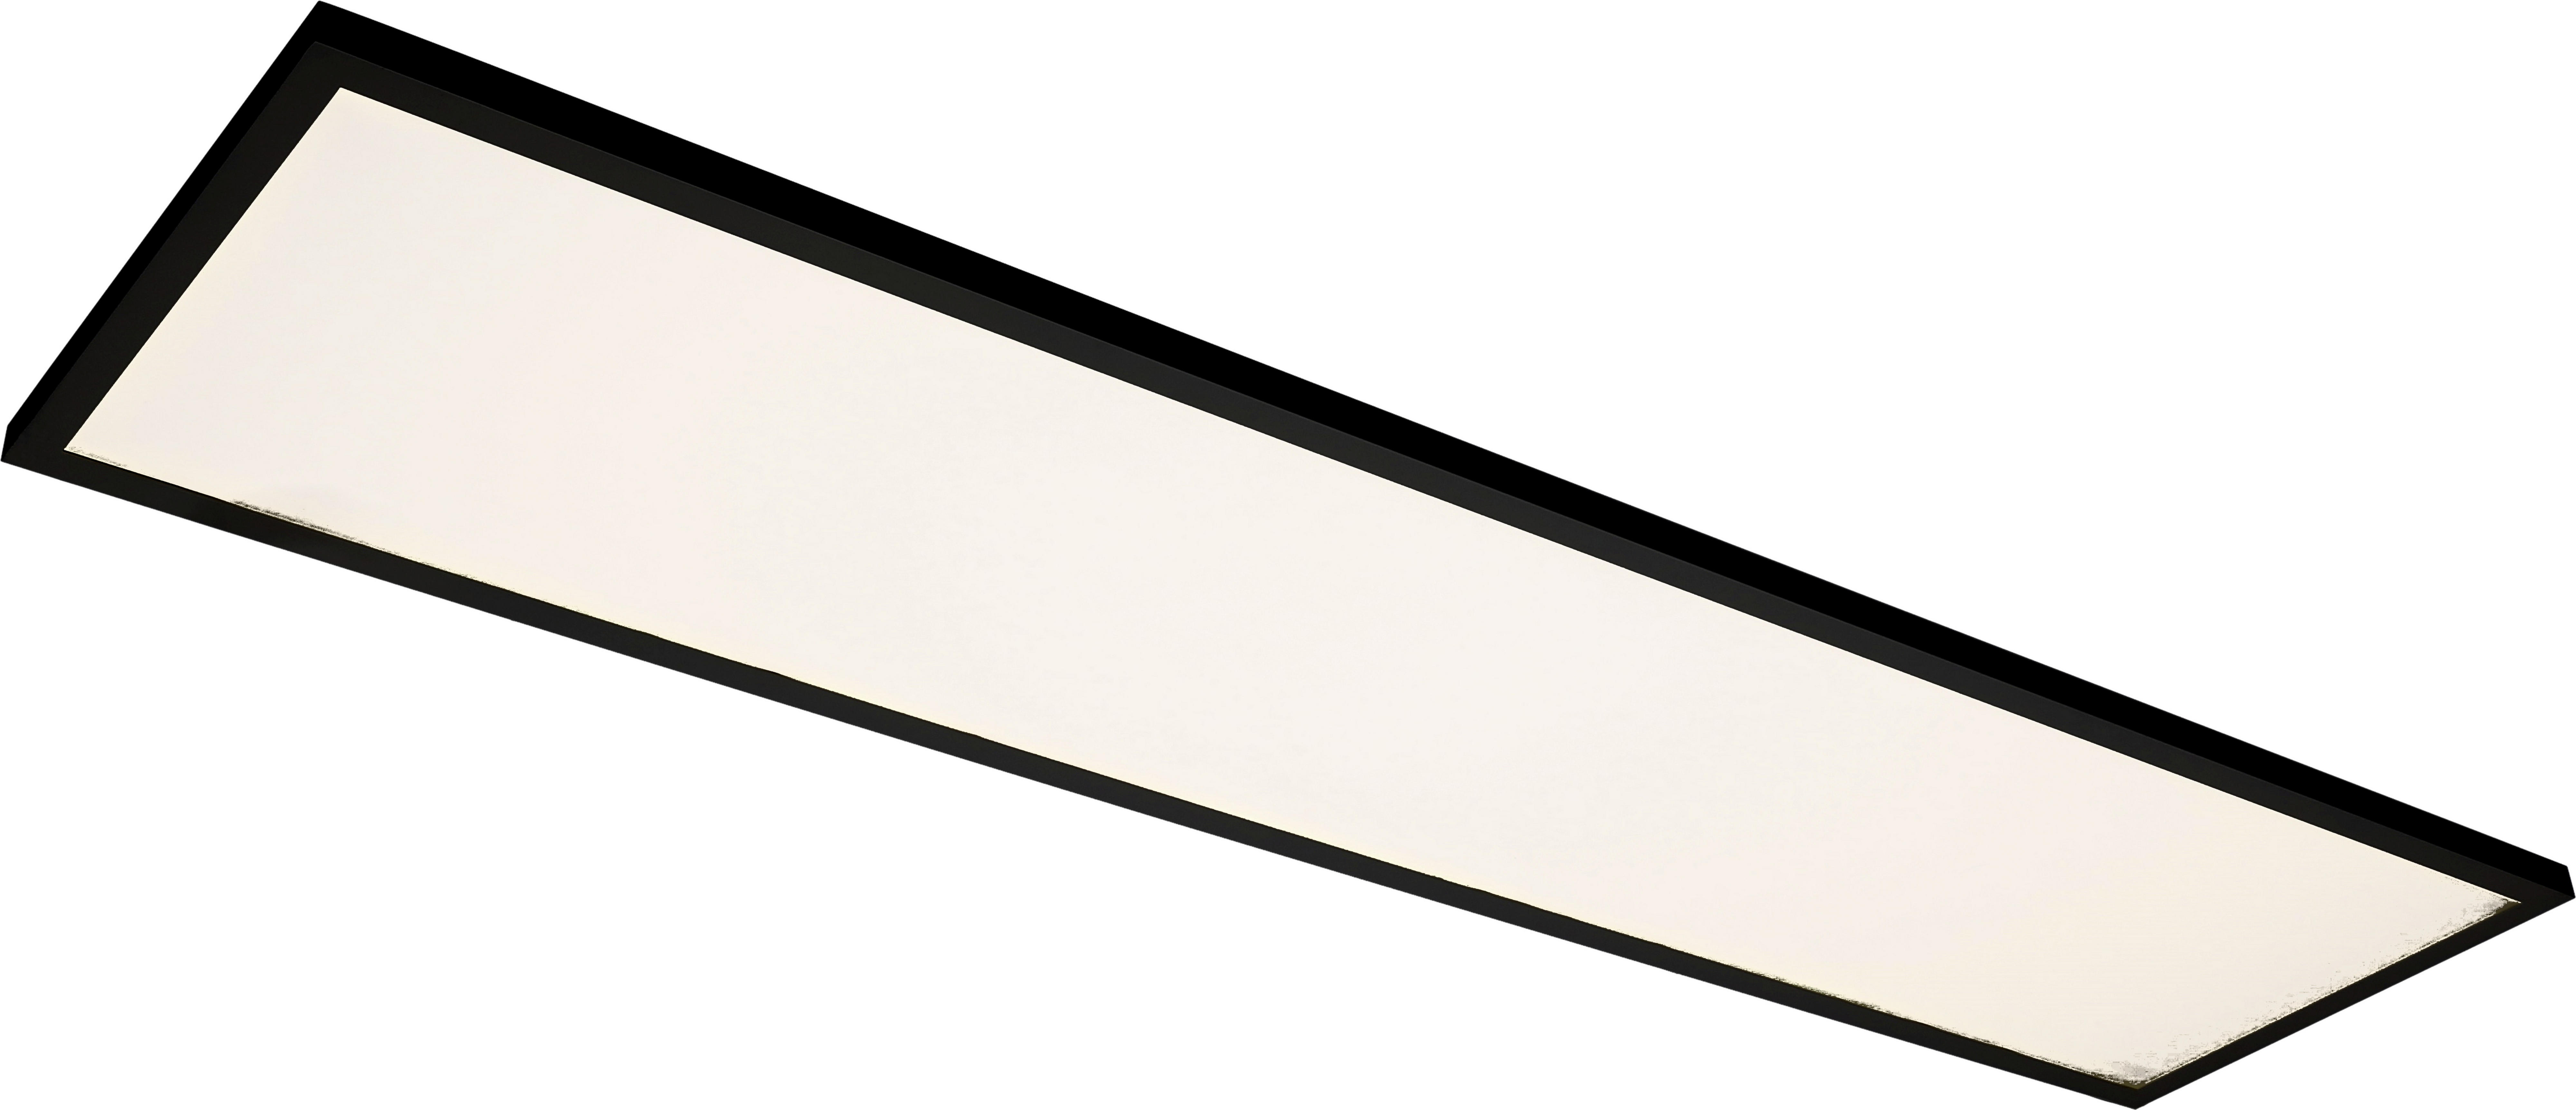 LED-PANEEL  - Schwarz/Weiß, Basics, Kunststoff/Metall (120/30/4,5cm) - Novel